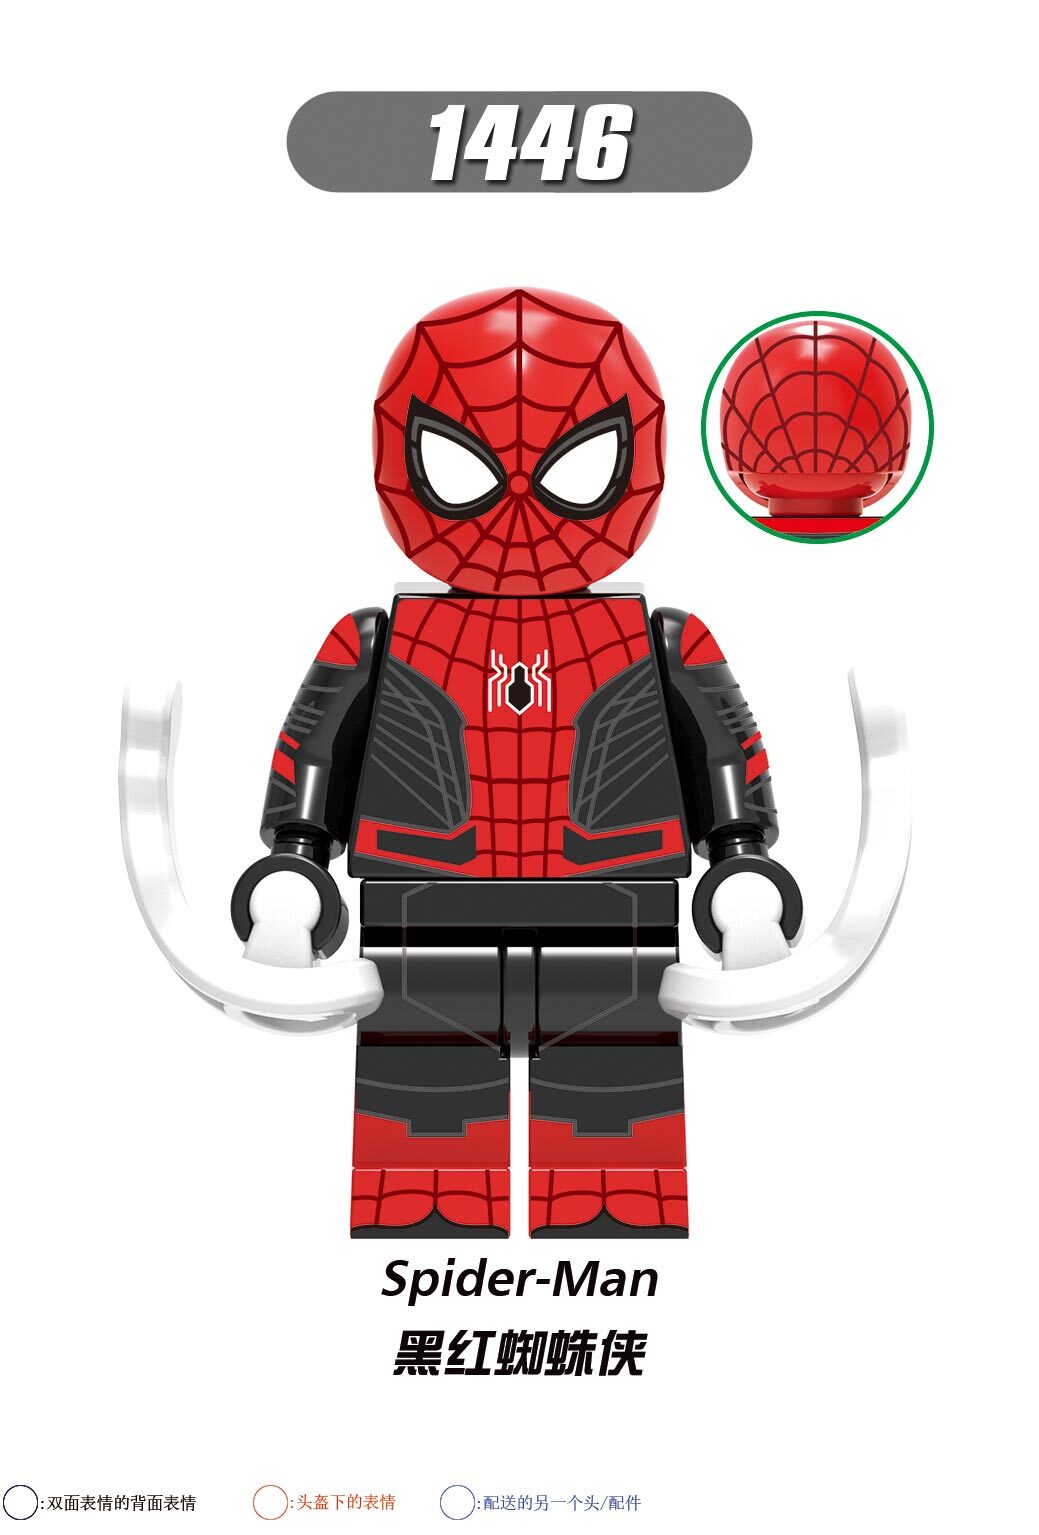 XH 1446 1447 1448 1449 1450 1451 1452 1453 X0280 Spider Man Building Blocks  Mandalorian Figures For Children Toys 